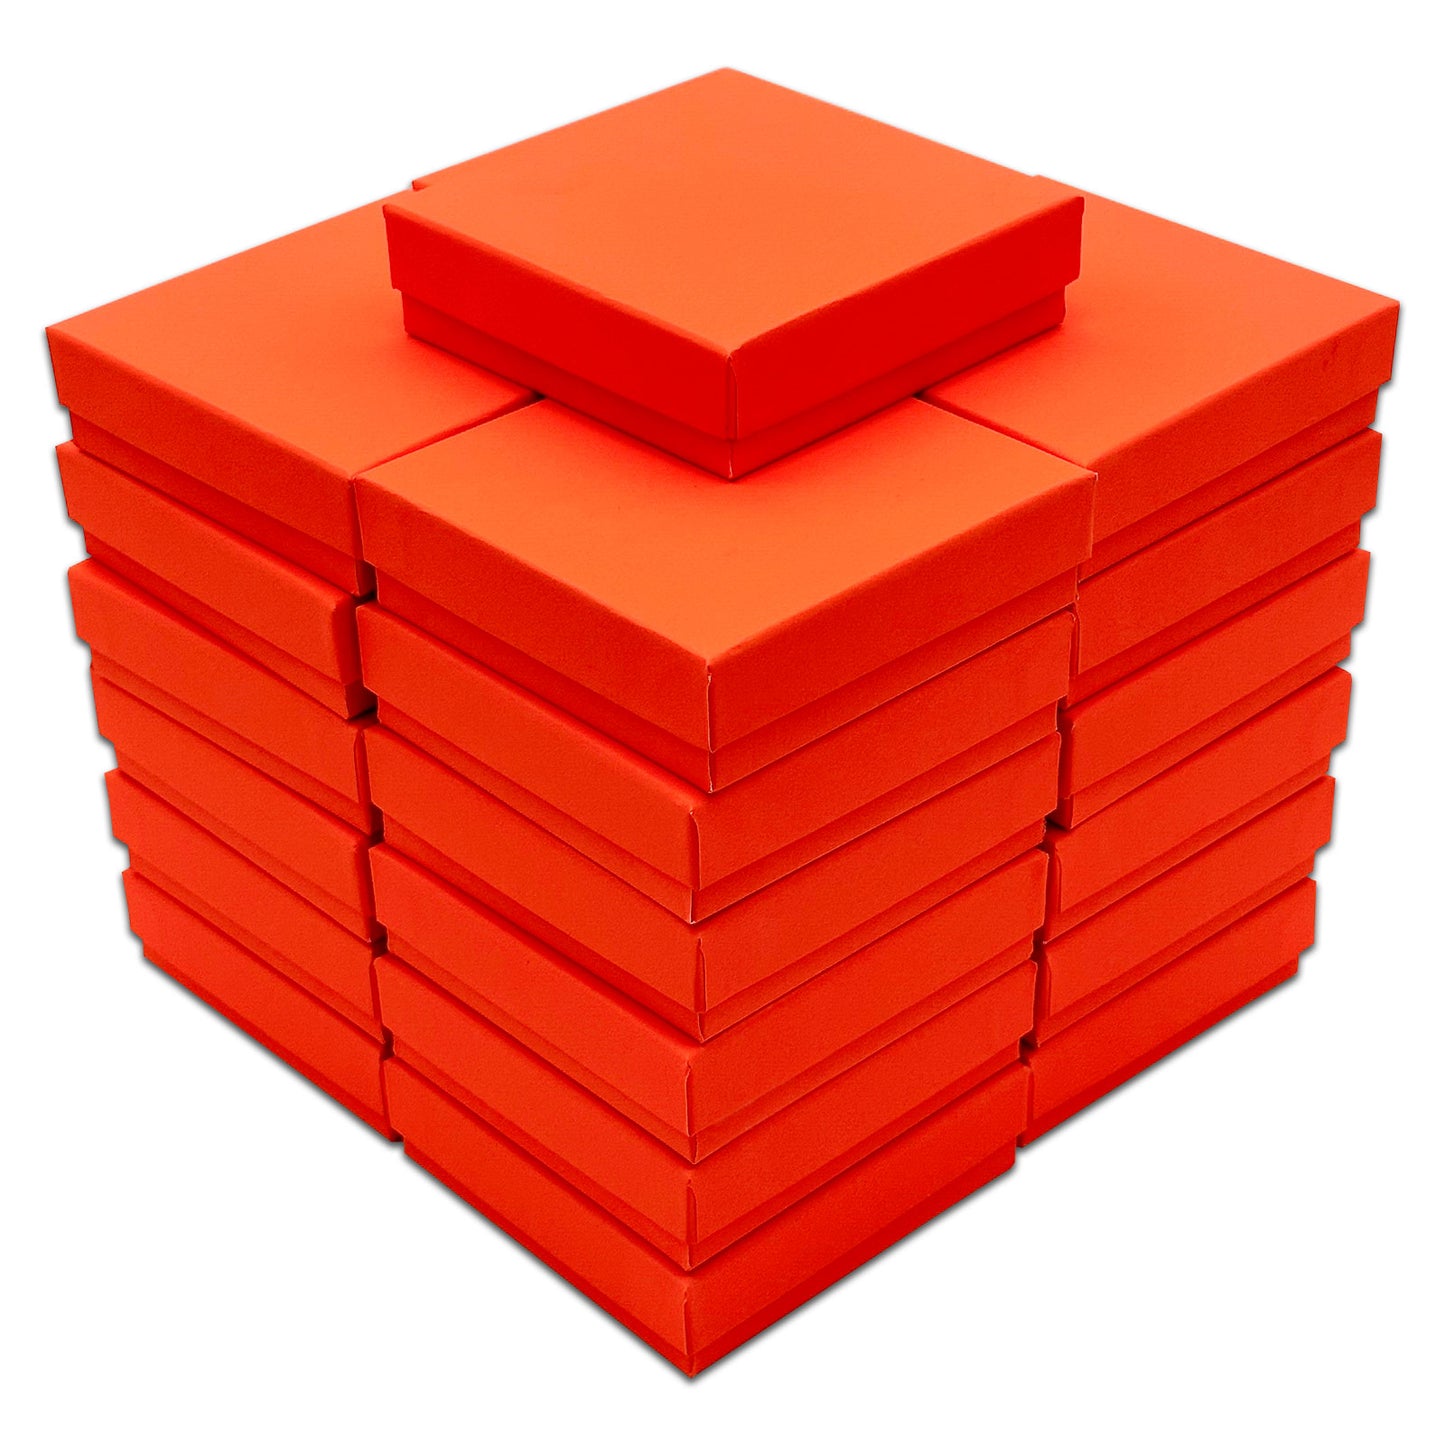 3 1/2" x 3 1/2" x 1" Neon Orange Cotton Filled Paper Box